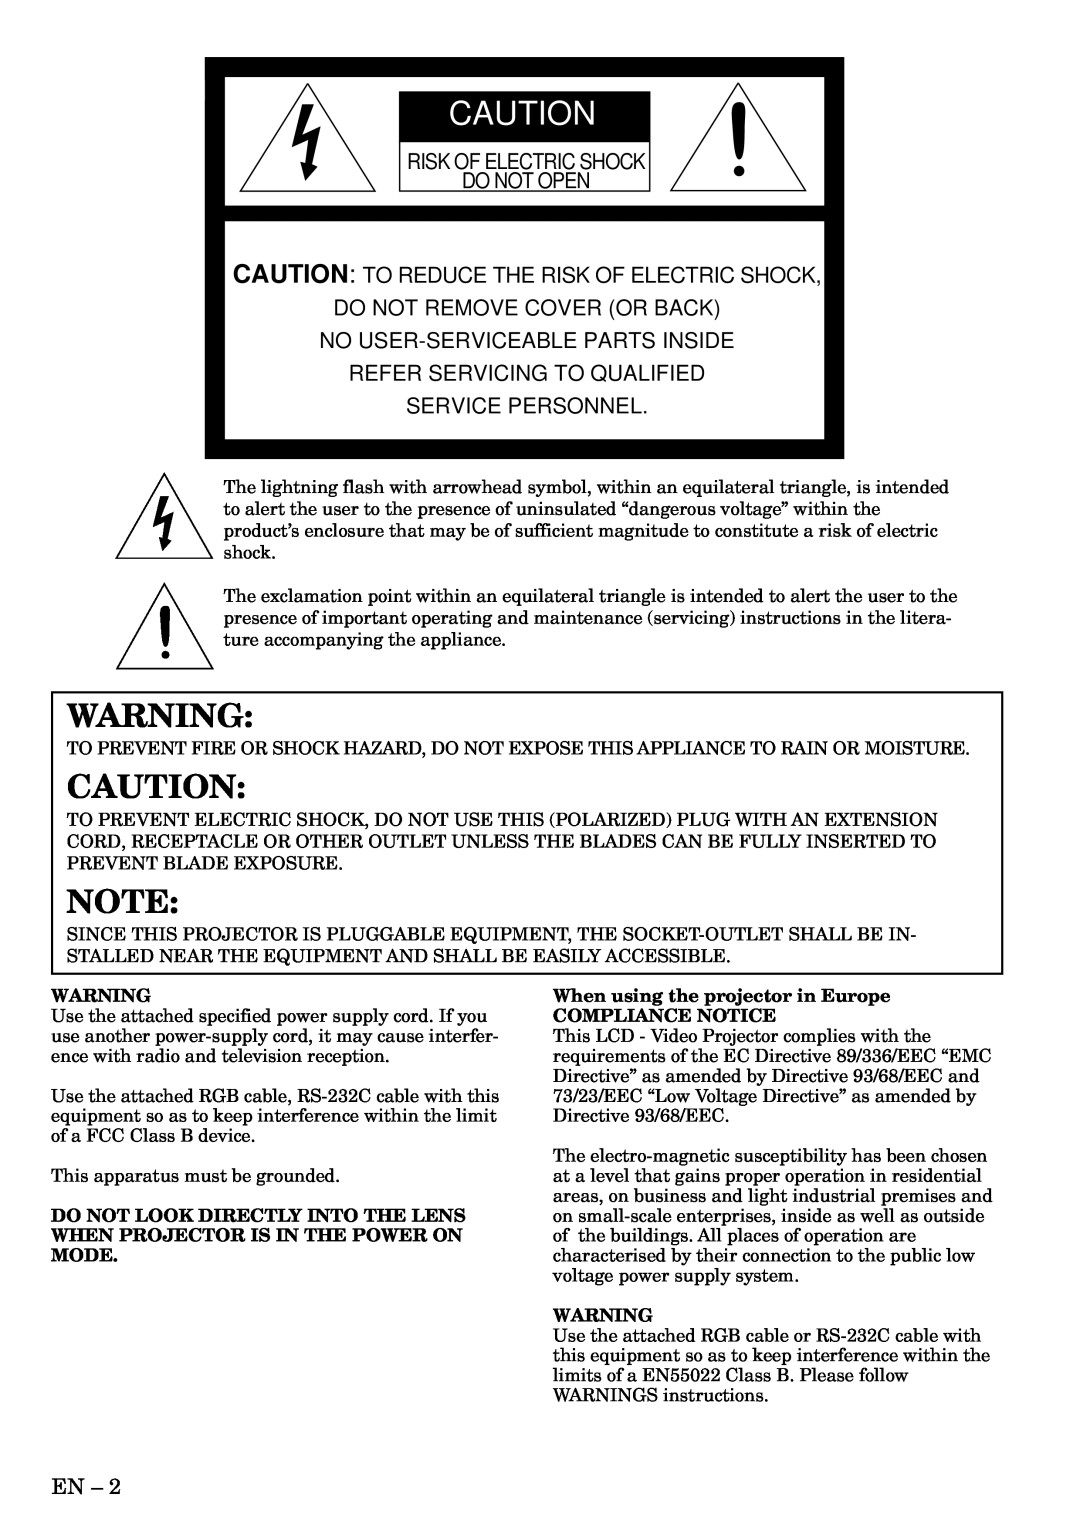 Mitsubishi Electronics XL1U user manual Risk Of Electric Shock Do Not Open, Caution To Reduce The Risk Of Electric Shock 